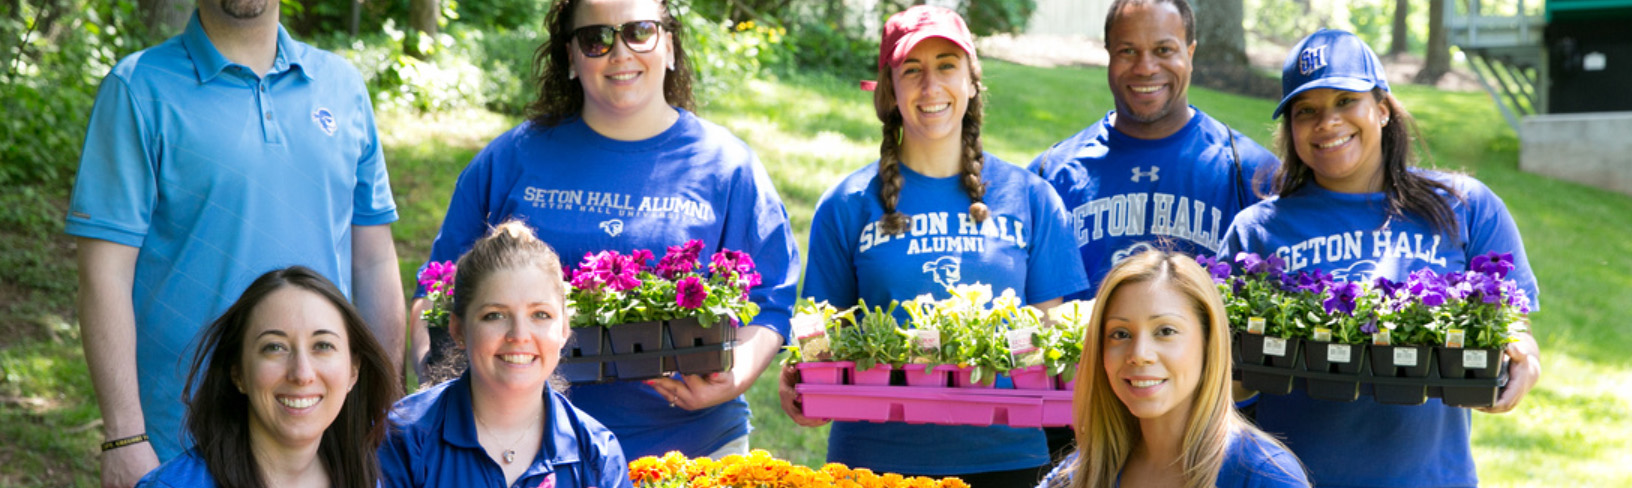 Seton Hall Community Members Volunteering at a Flower Garden